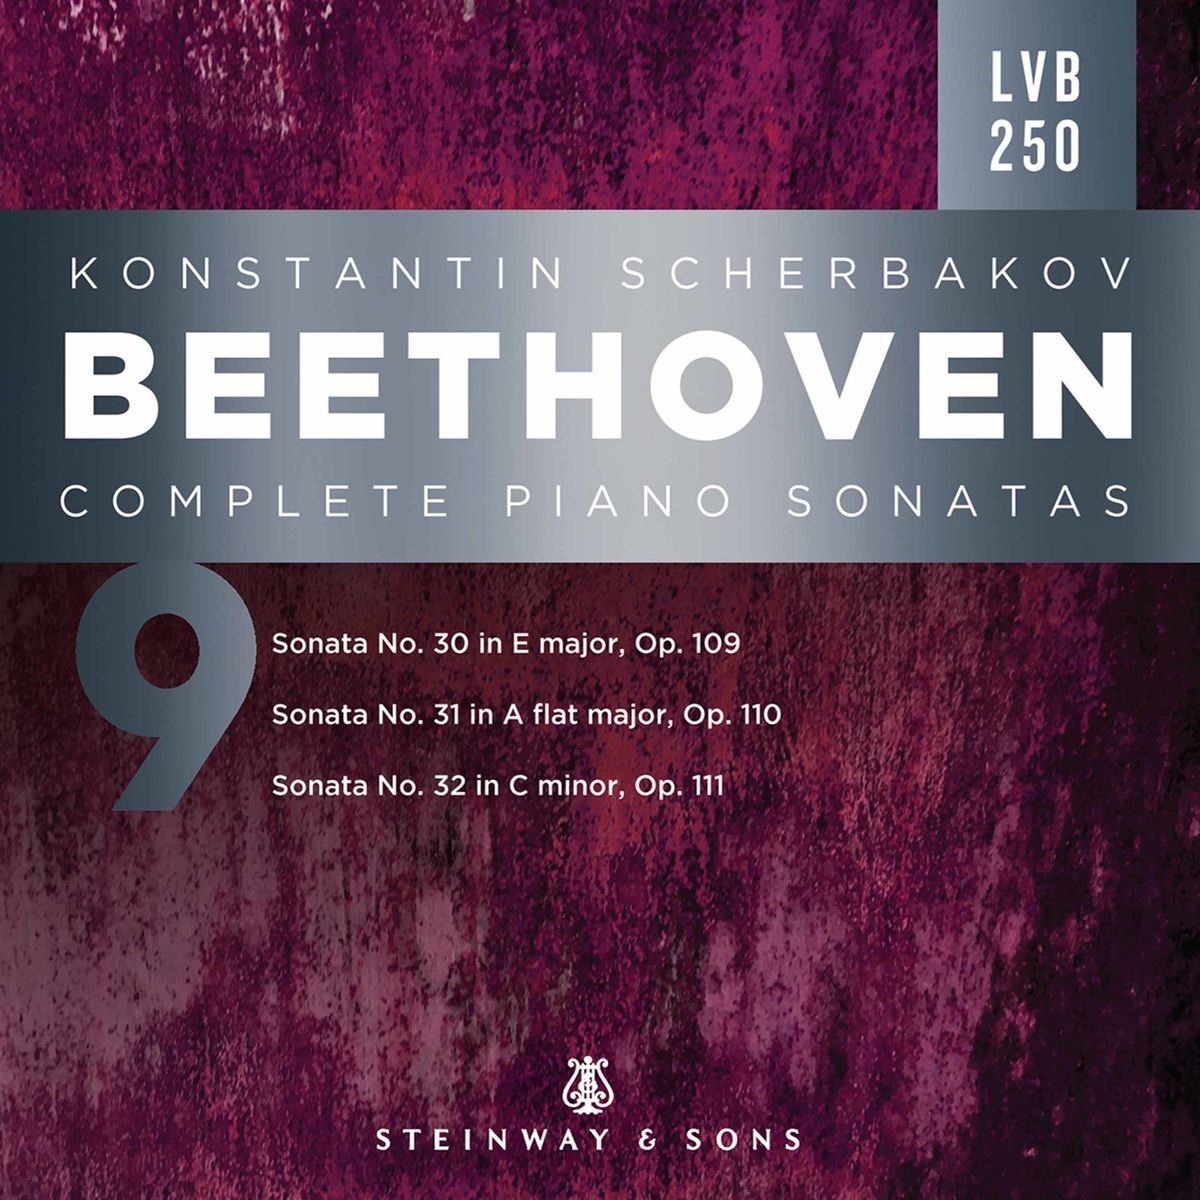 Konstantin Scherbakov - Beethoven: Complete Piano Sonatas, Vol. 9 (2020) [FLAC 24bit/96kHz]